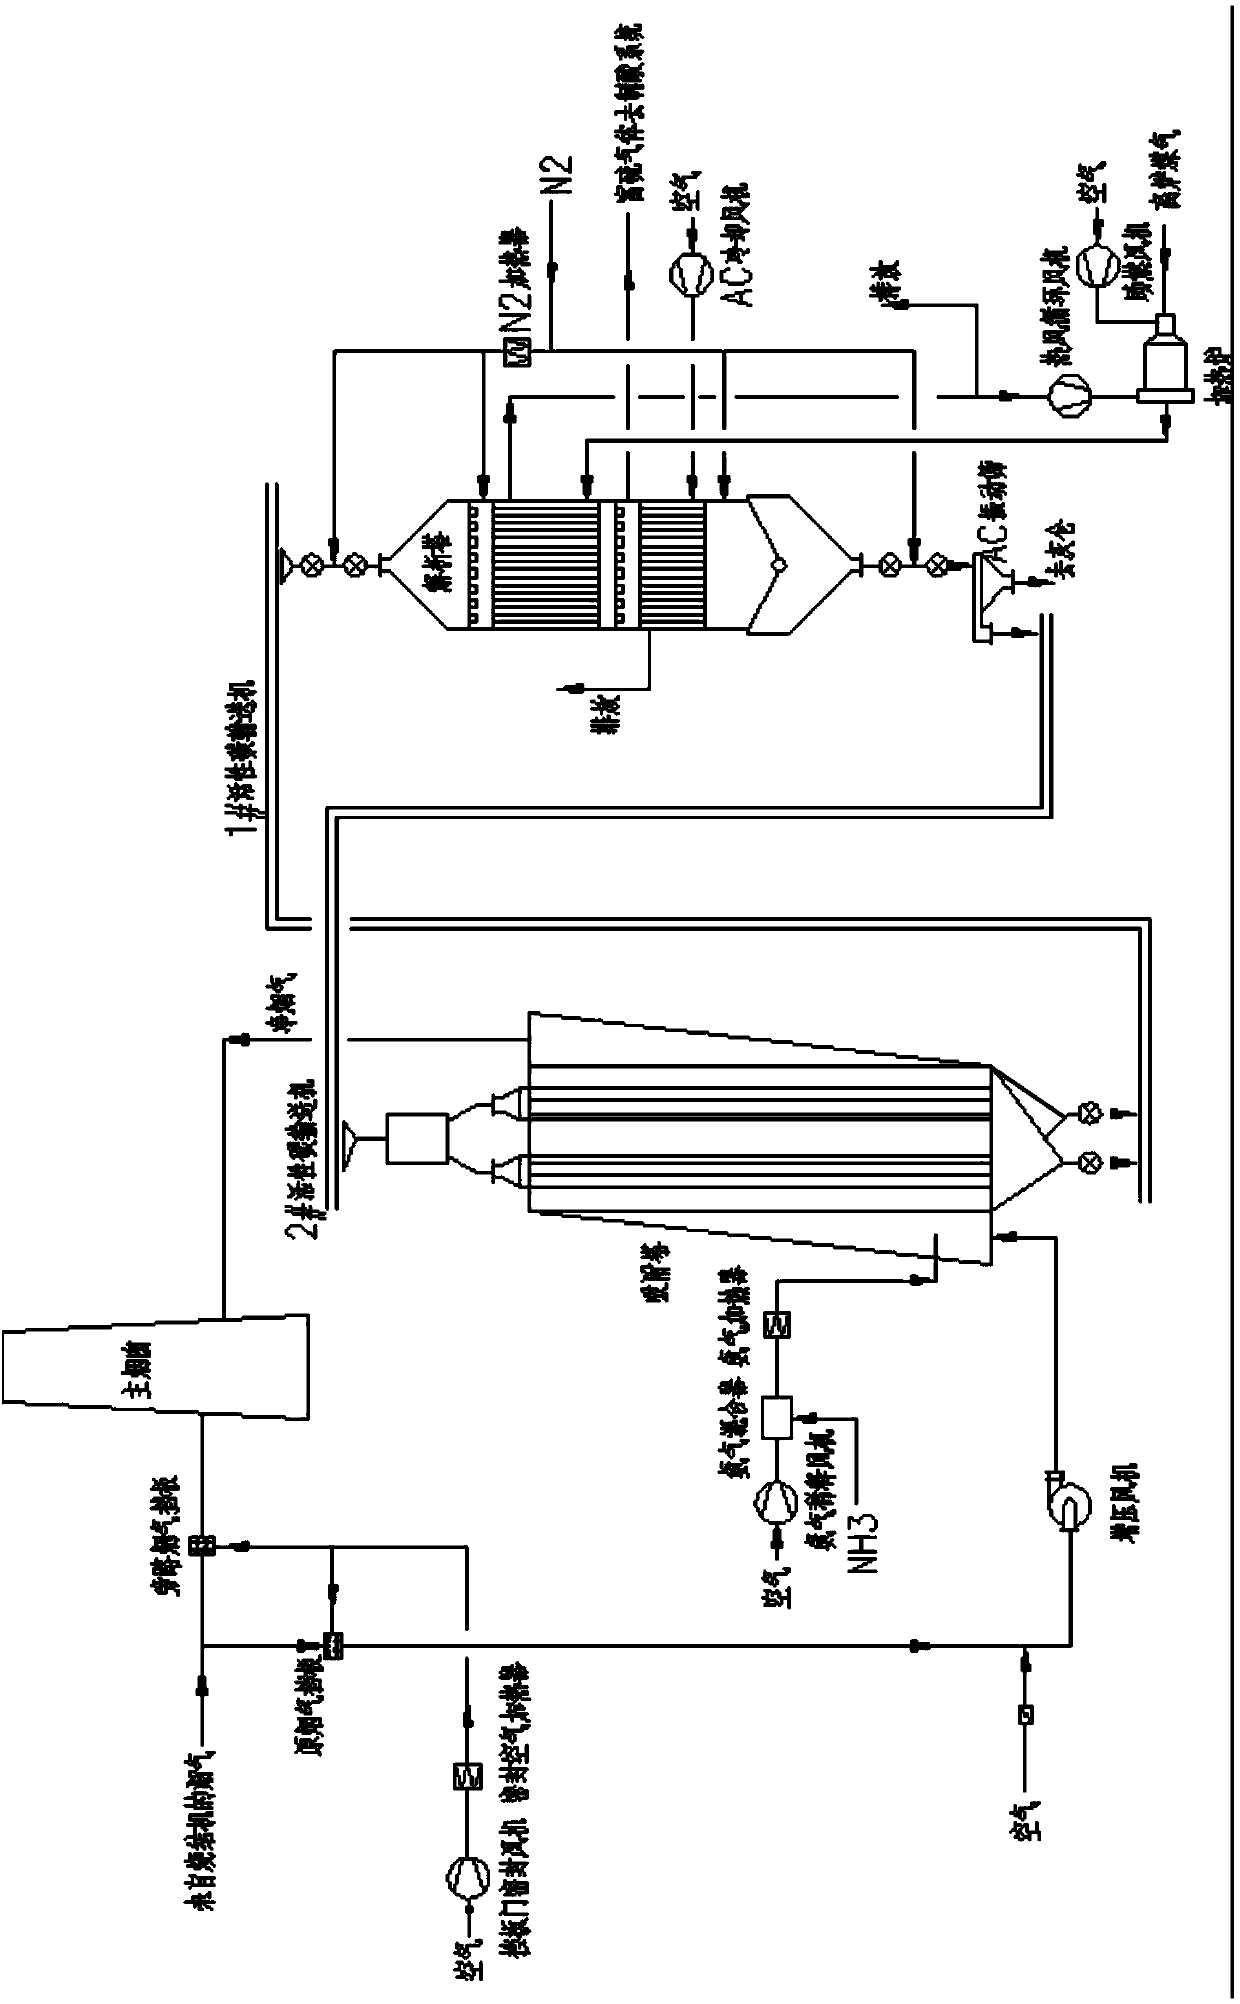 Desulfurization and denitration device for efficient denitration